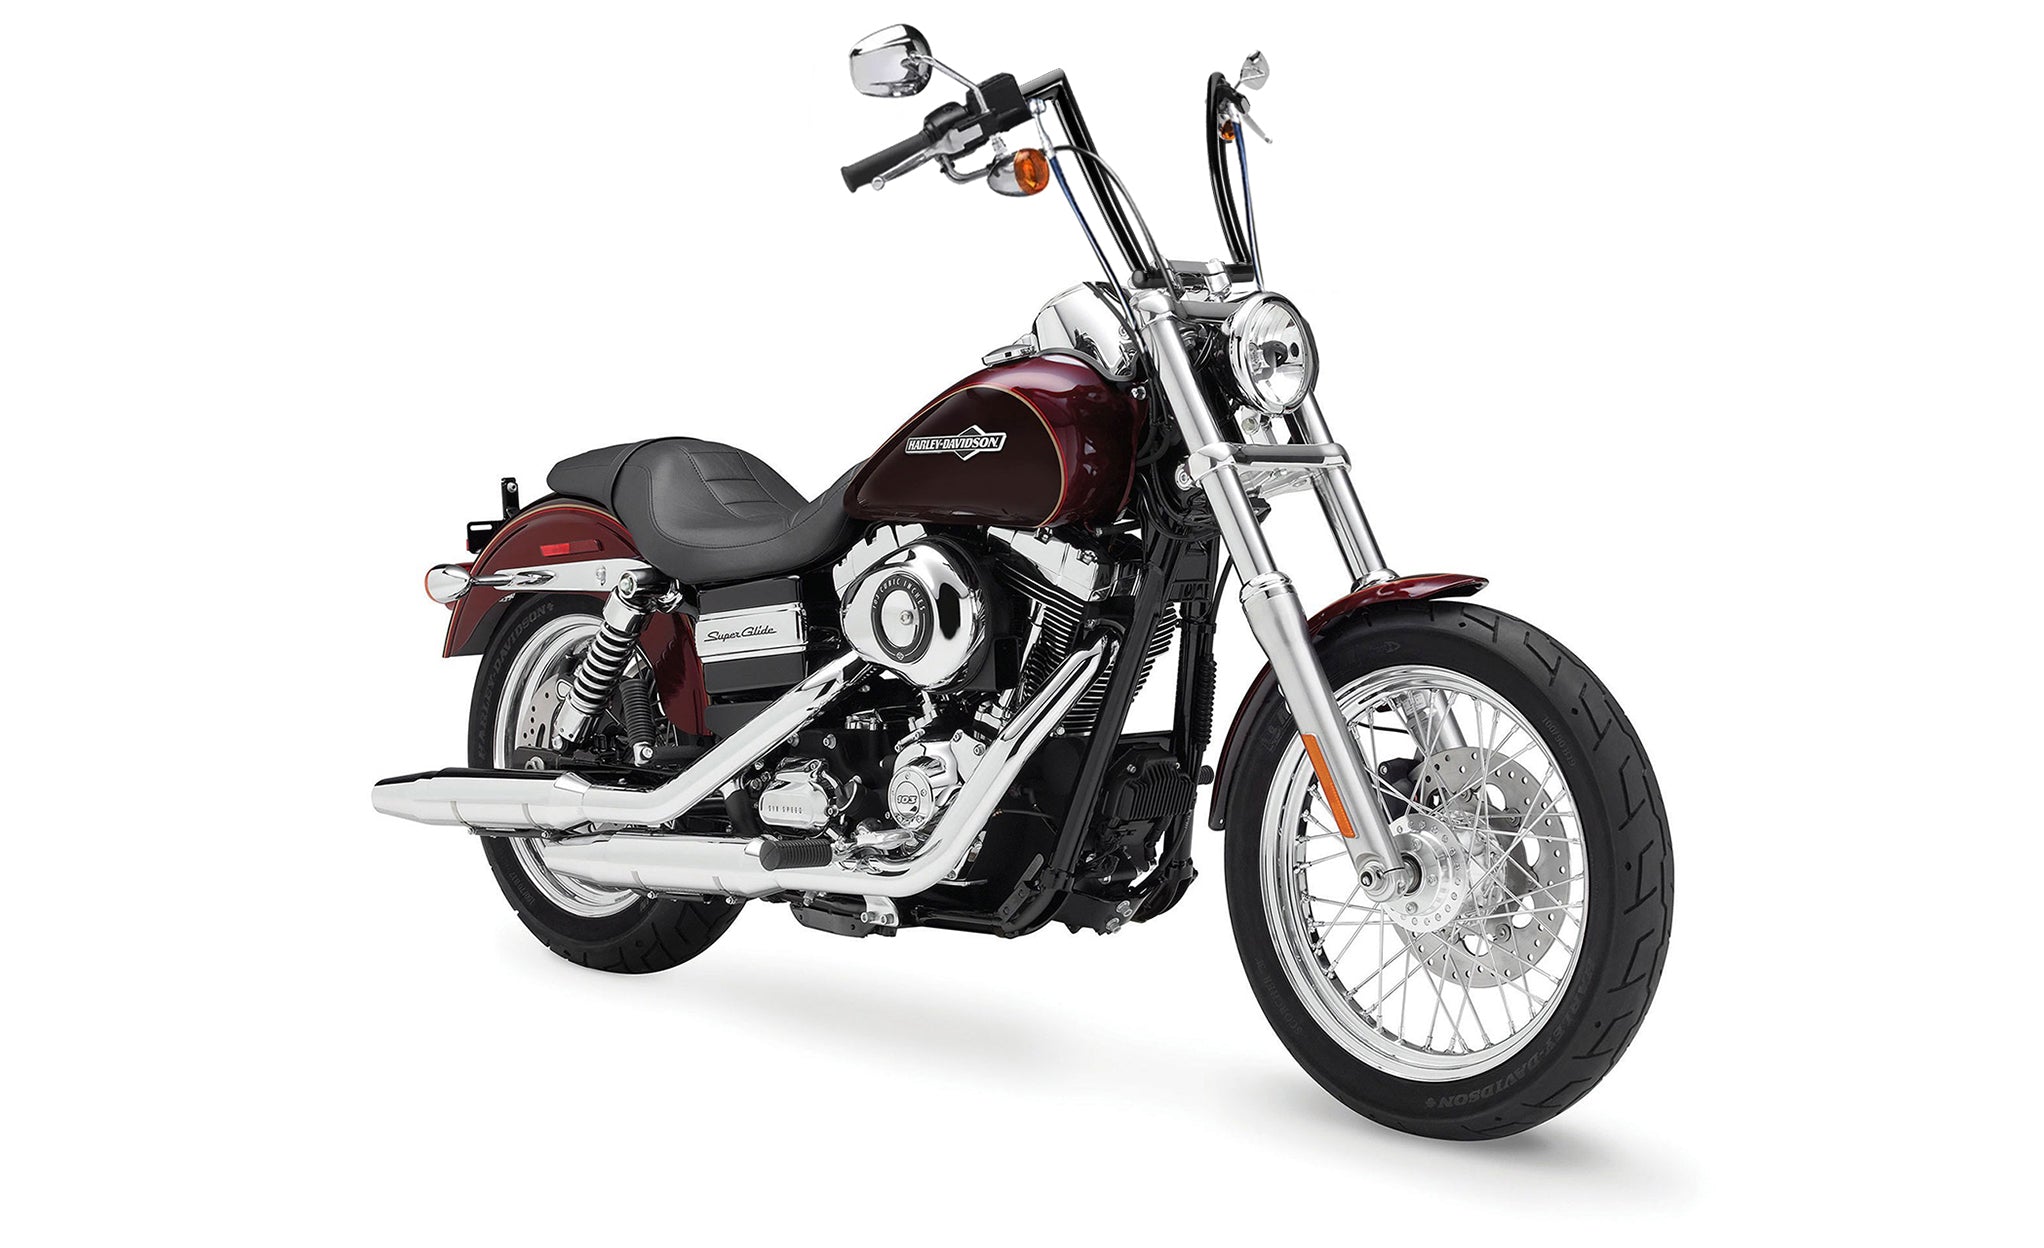 Viking Iron Born 9" Handlebar For Harley Dyna Super Glide FXD Gloss Black Bag on Bike View @expand